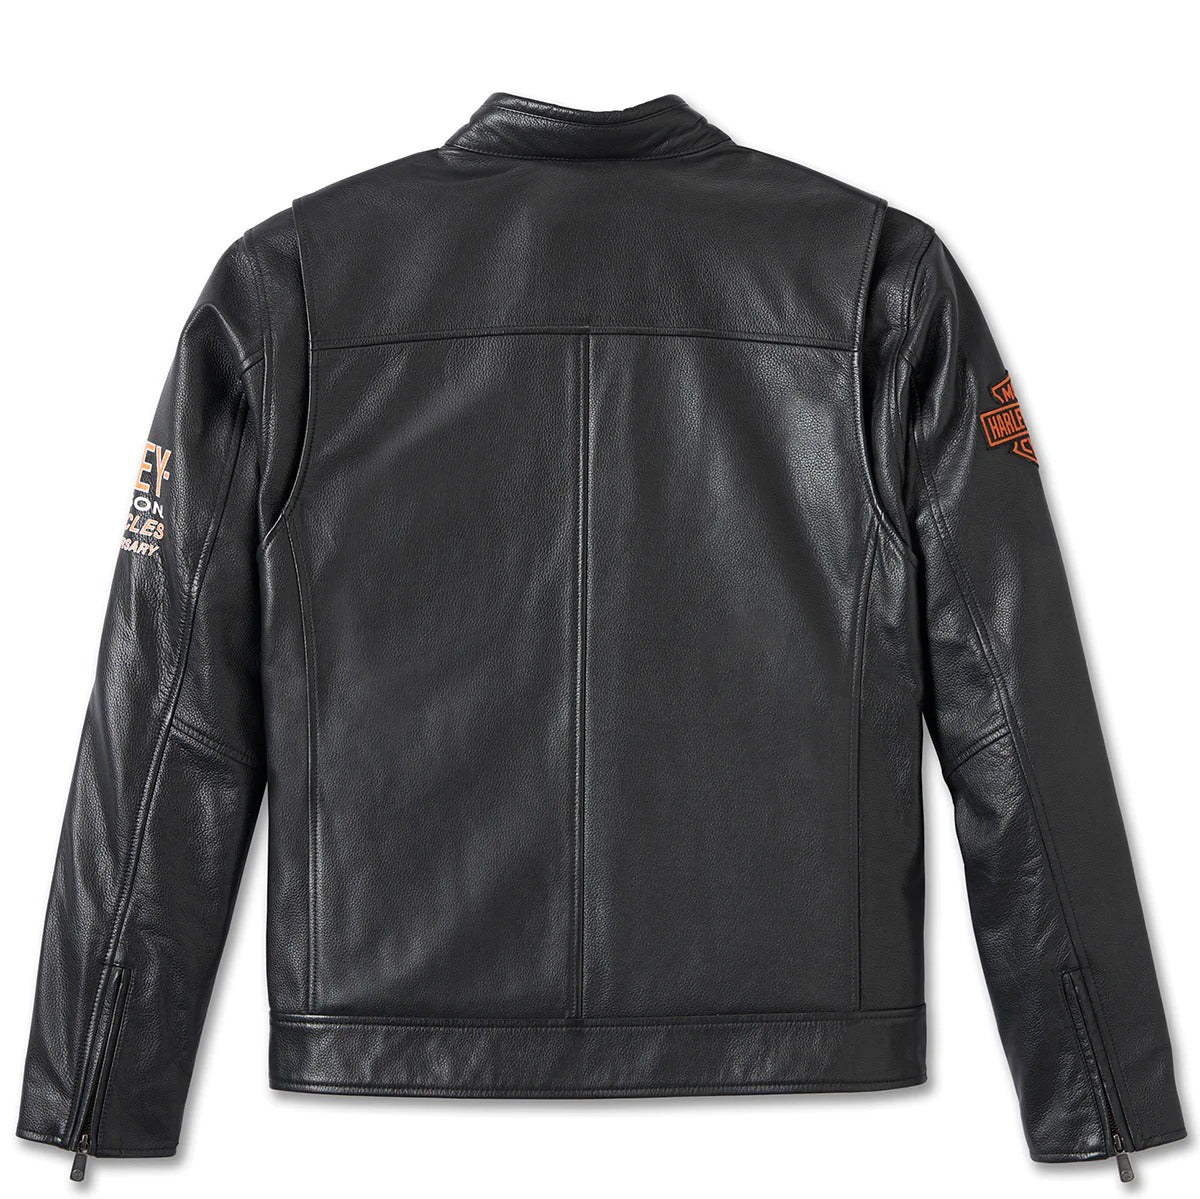 Harley-Davidson 120th Anniversary Racing Stripe Leather Jacket-Rolling Thunder Harley-Davidson